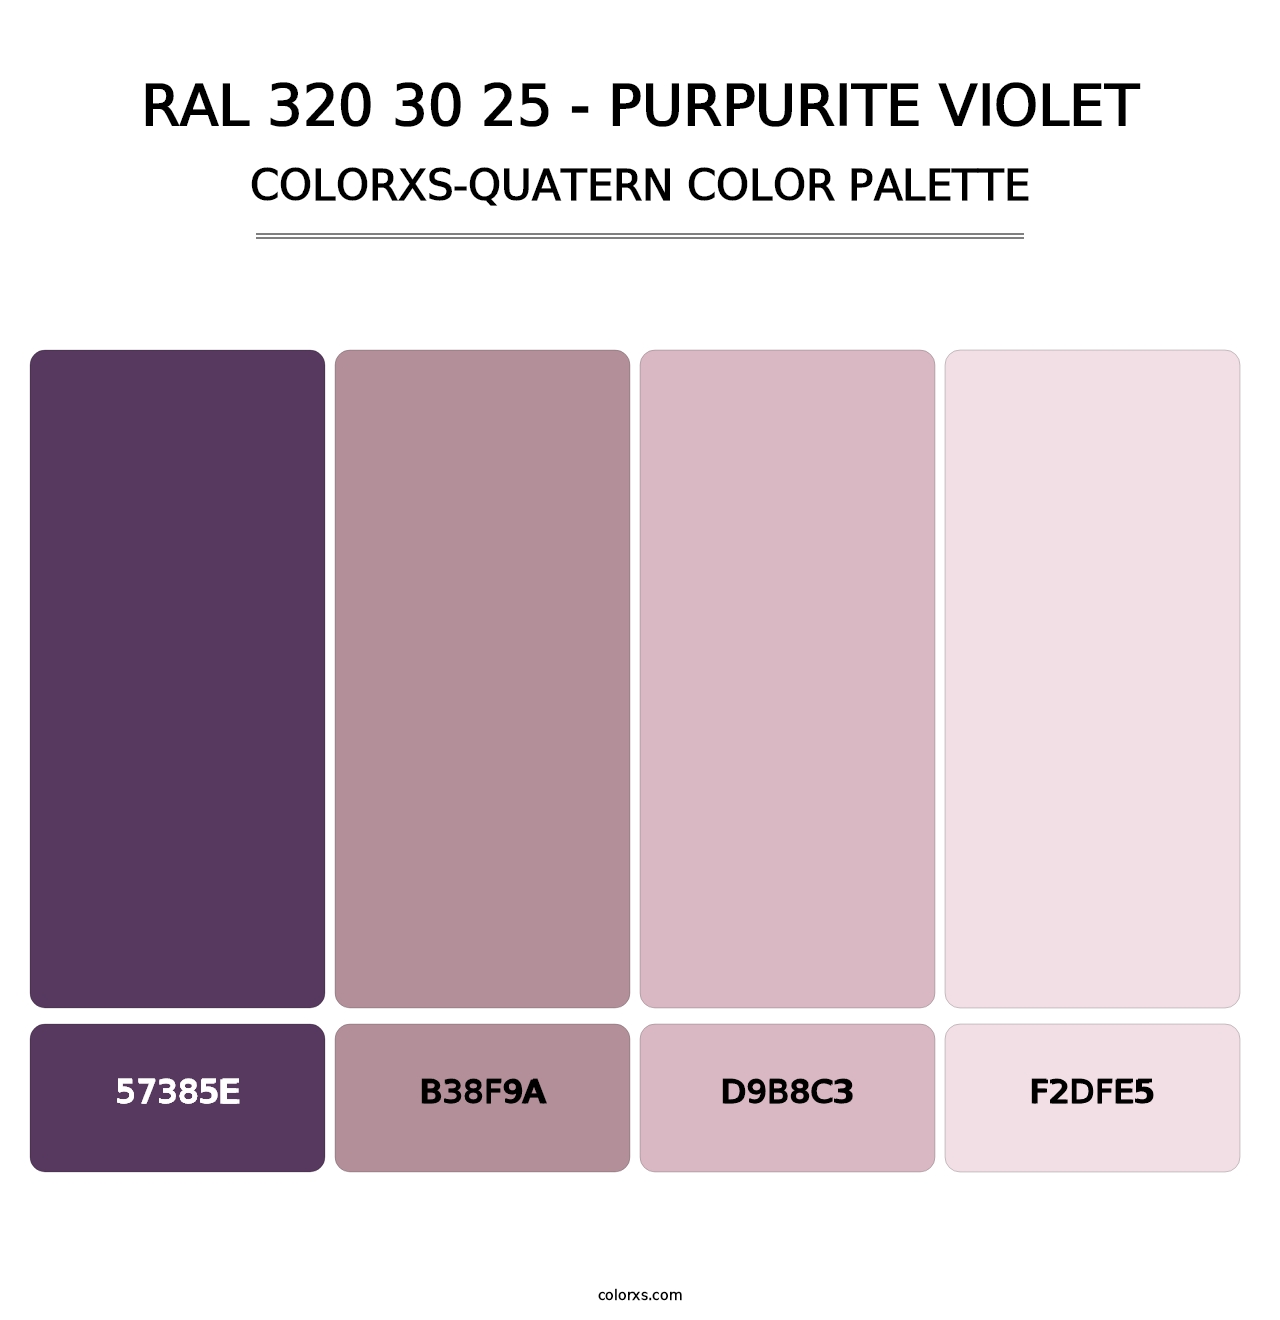 RAL 320 30 25 - Purpurite Violet - Colorxs Quatern Palette